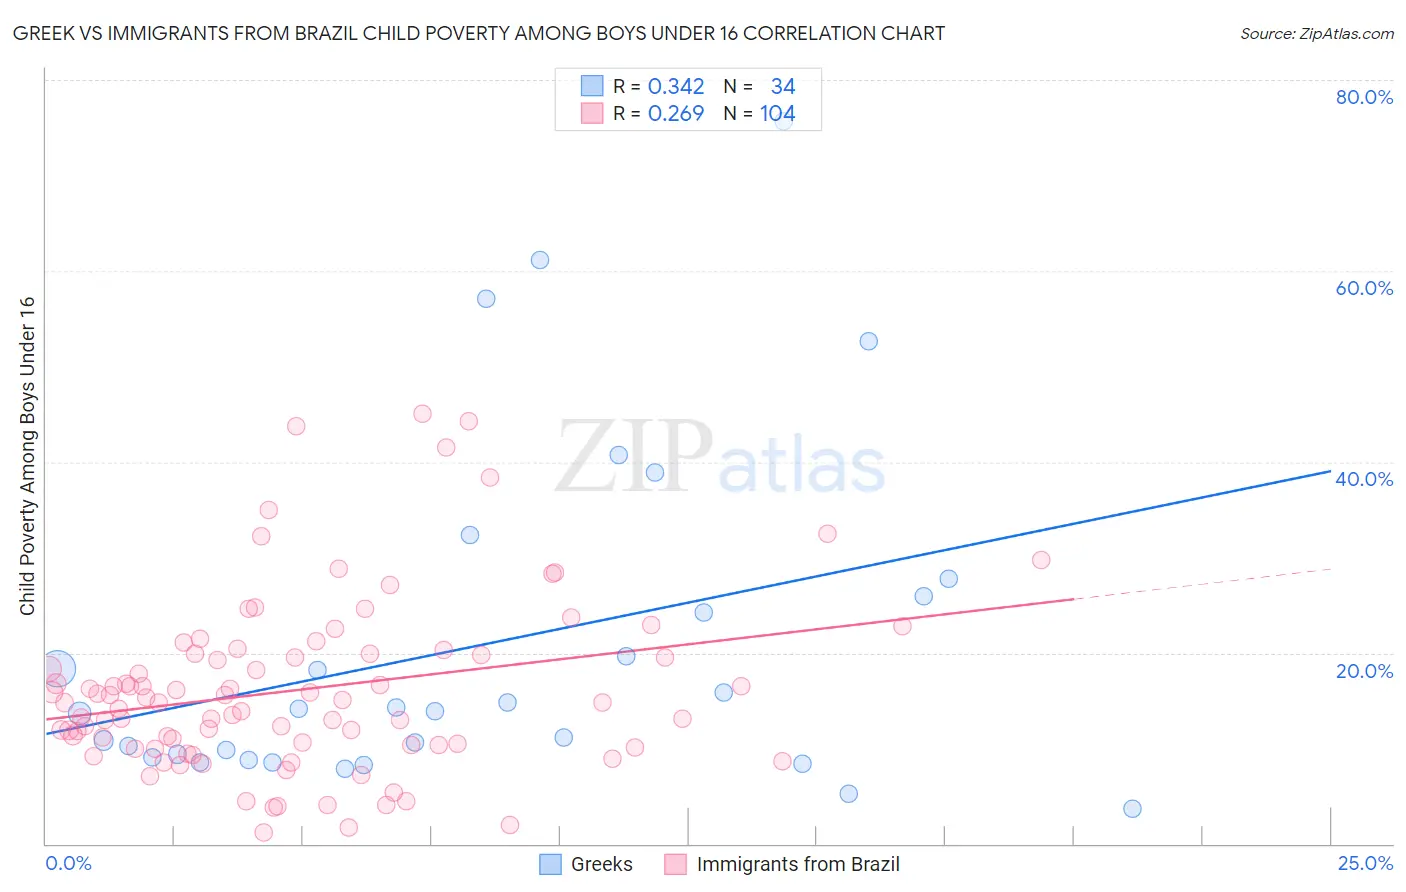 Greek vs Immigrants from Brazil Child Poverty Among Boys Under 16